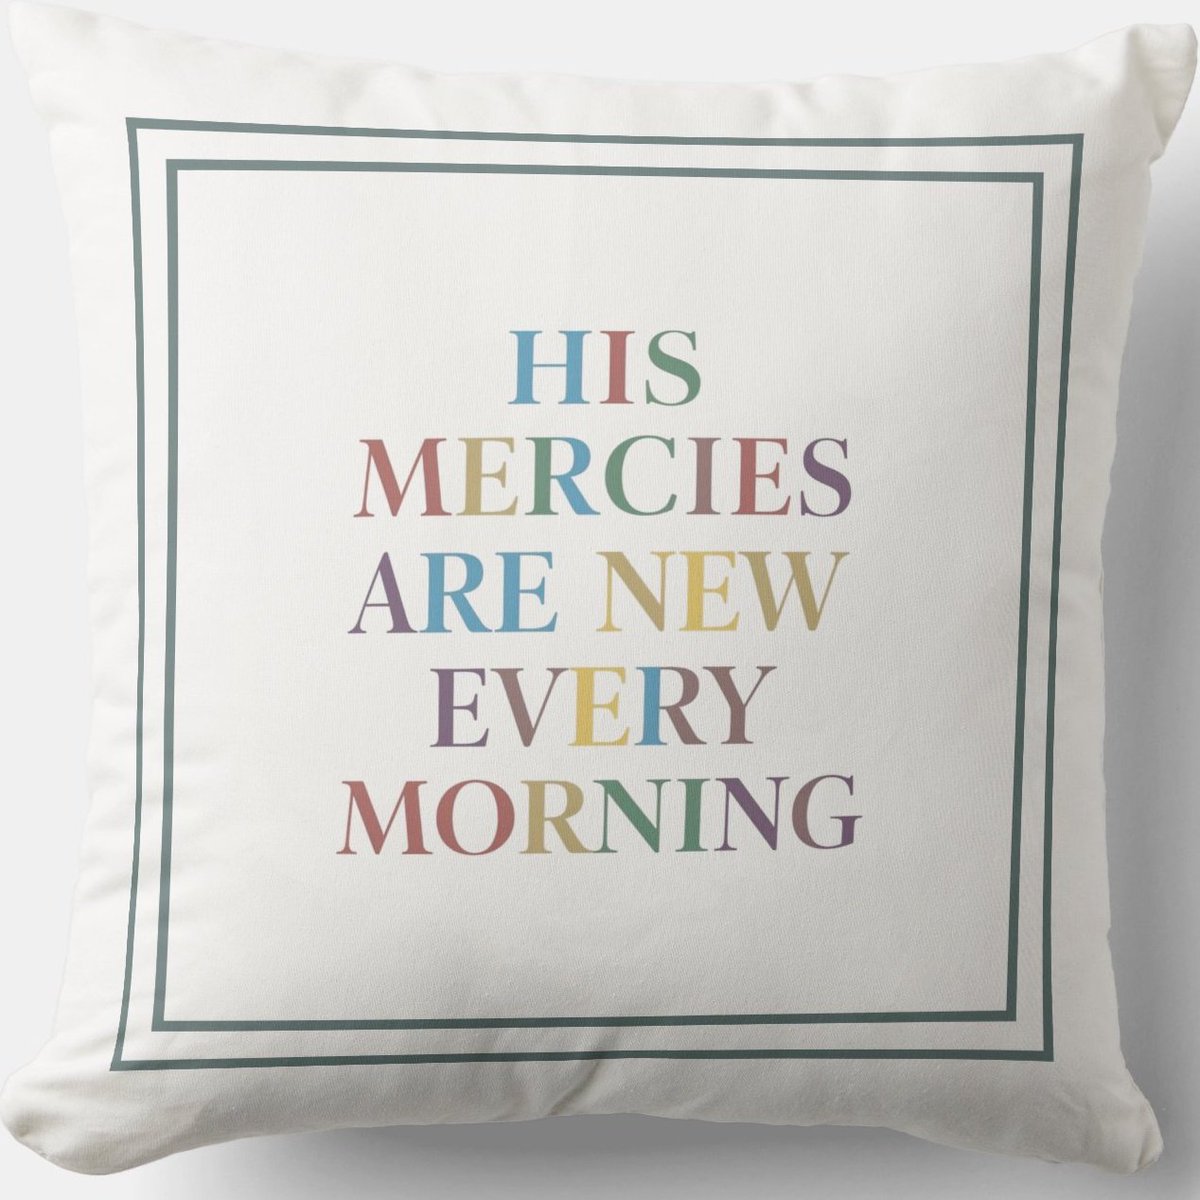 His Mercies Are New Every Morning #Cushion zazzle.com/his_mercies_ar… Throw #Pillow #Blessing #JesusChrist #JesusSaves #Jesus #christian #spiritual #Homedecoration #uniquegift #giftideas #MothersDayGifts #giftformom #giftidea #HolySpirit #pillows #giftshop #giftsforher #giftsformom